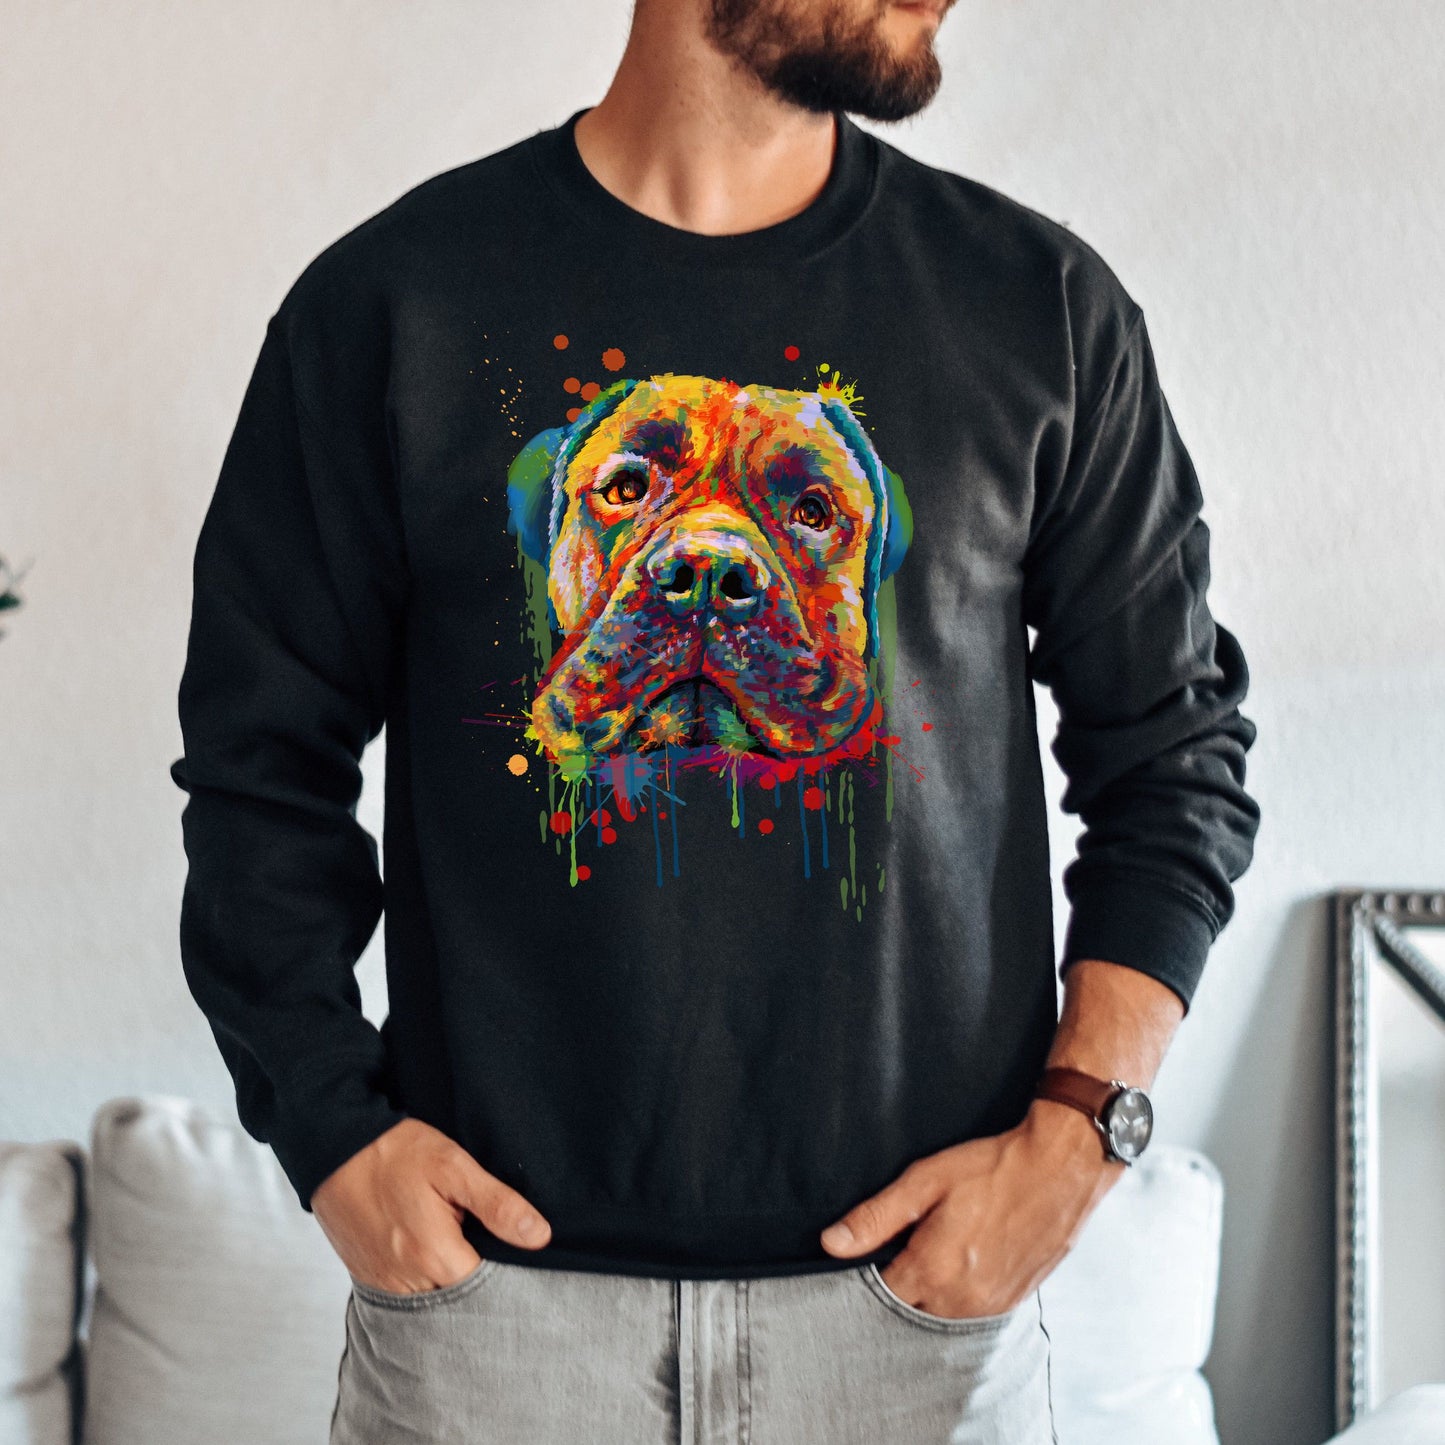 Abstract Bullmastiff dog Unisex Crewneck Sweatshirt with expressive splashes-Family-Gift-Planet